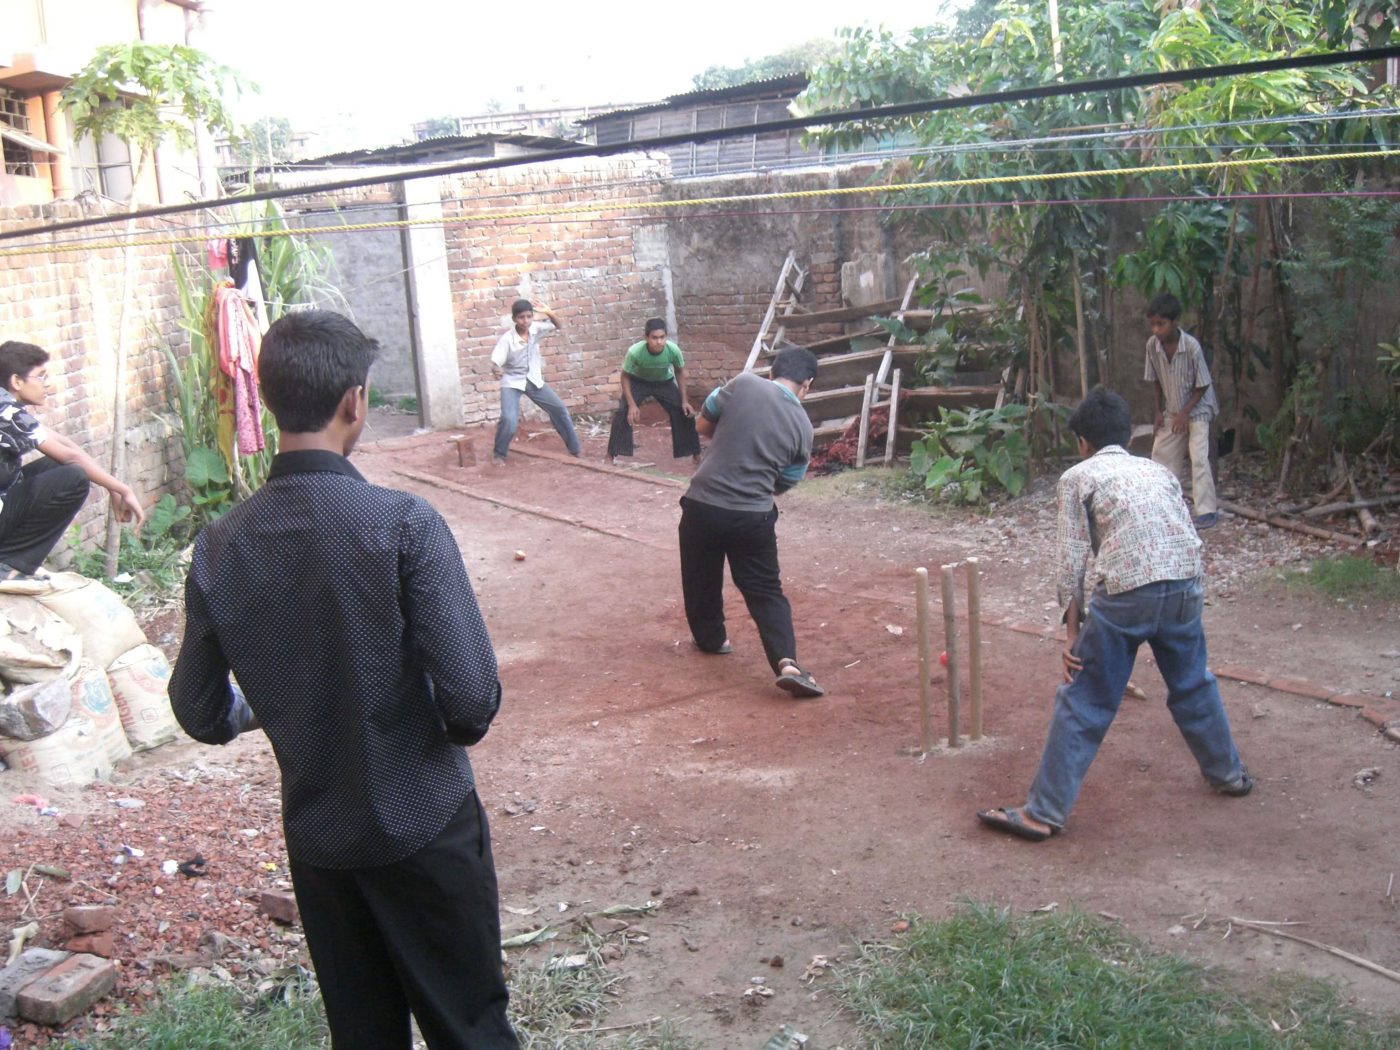 Playing cricket in Bangladesh, backpacking in Bangladesh